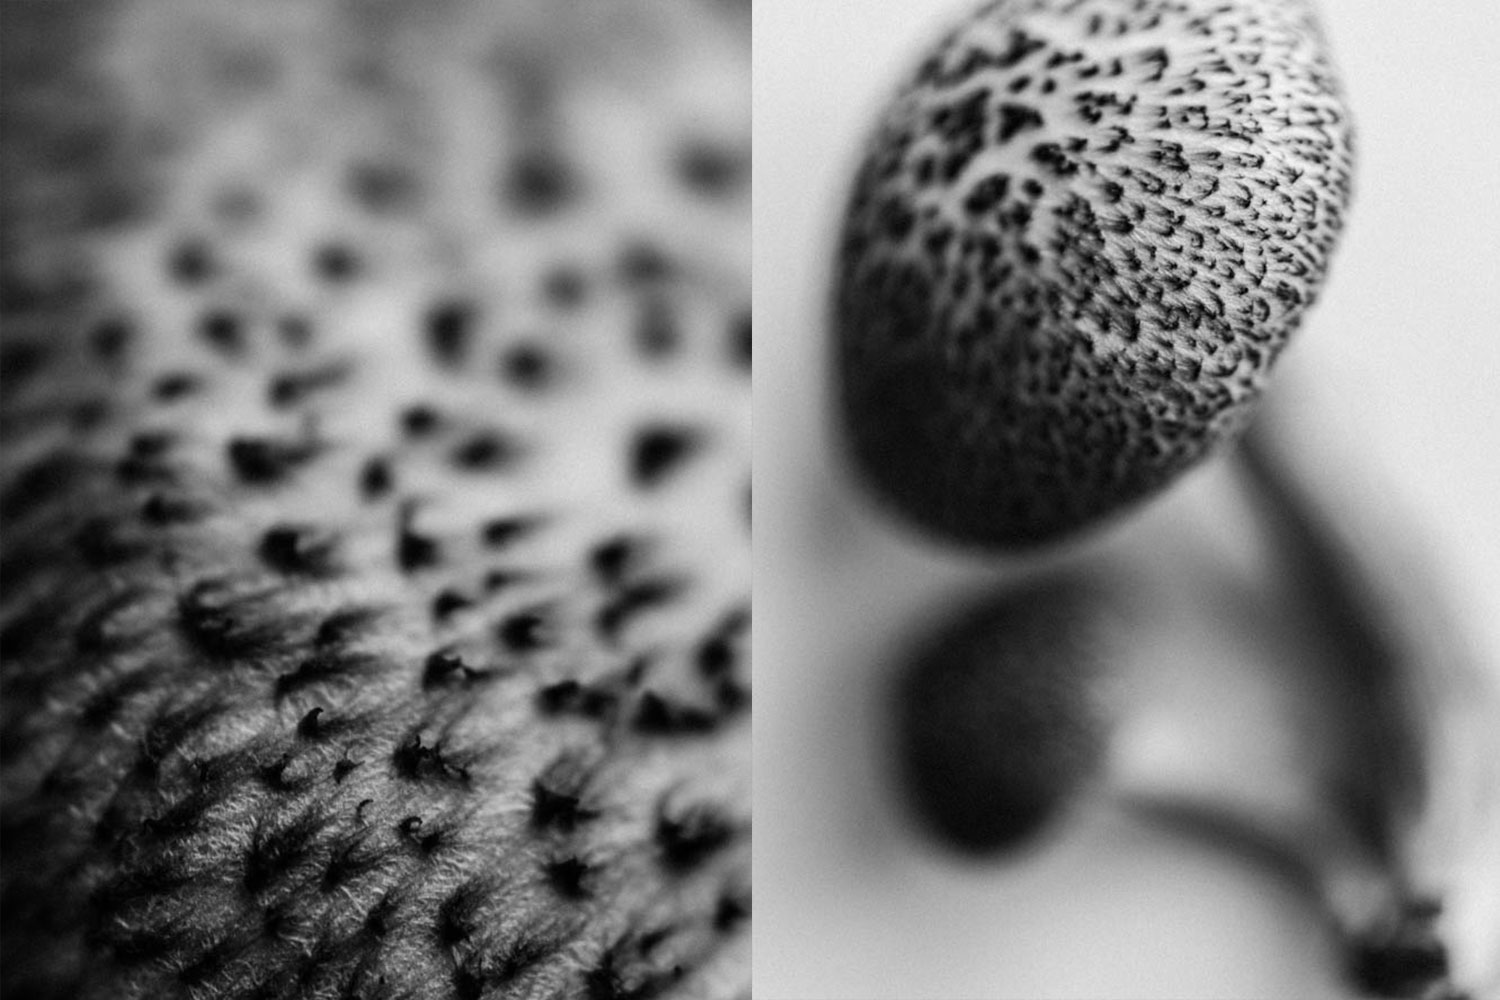 Harvested wild mushroom cap pattern in black and white art image.